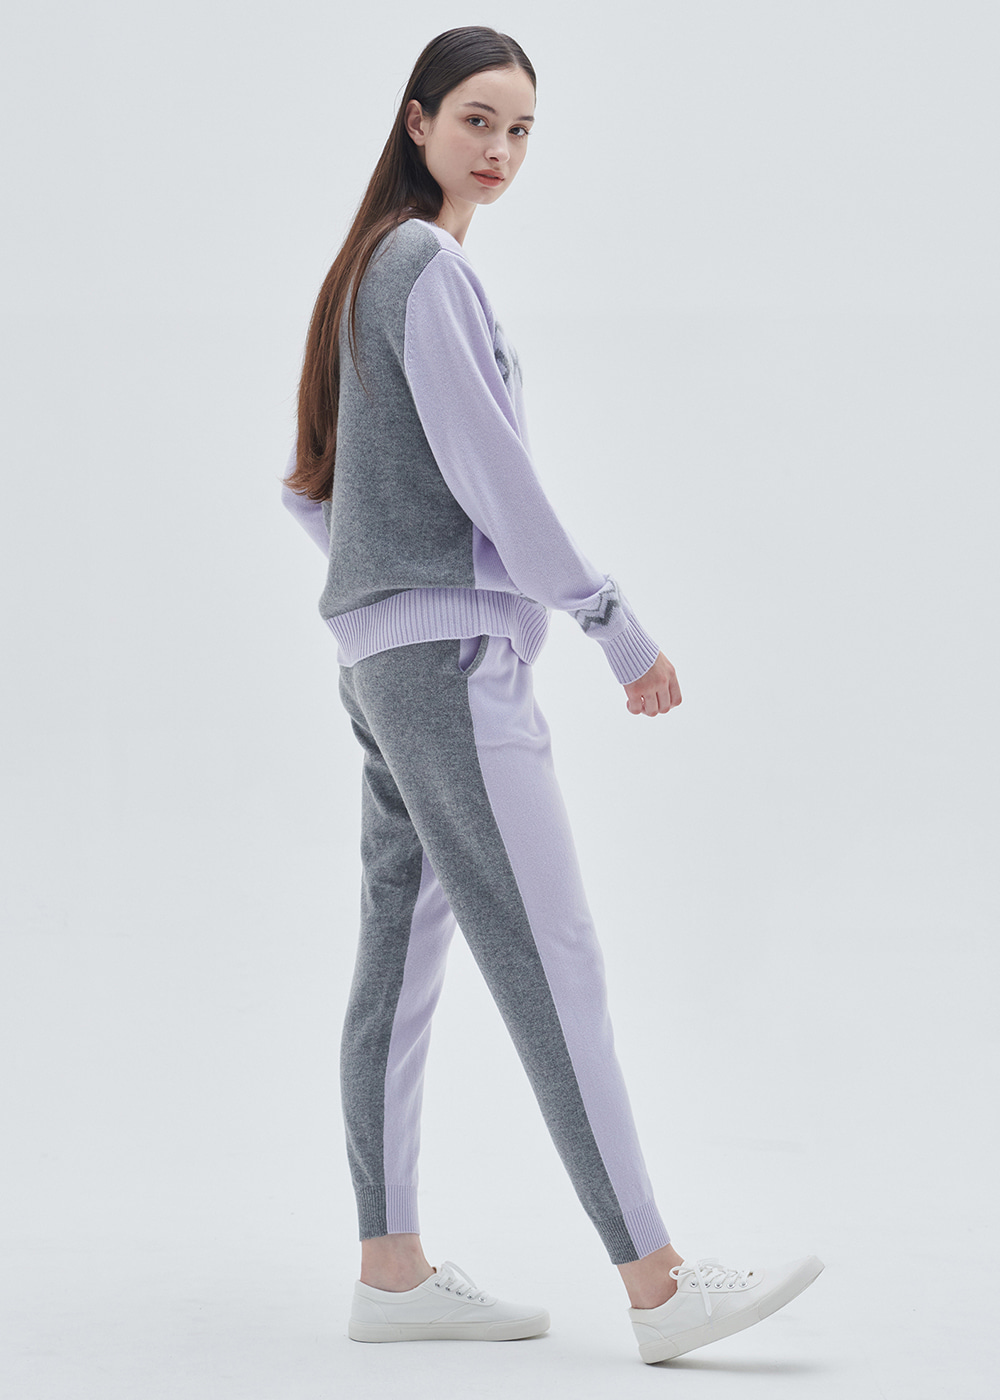 Color Revese pants(lavender)